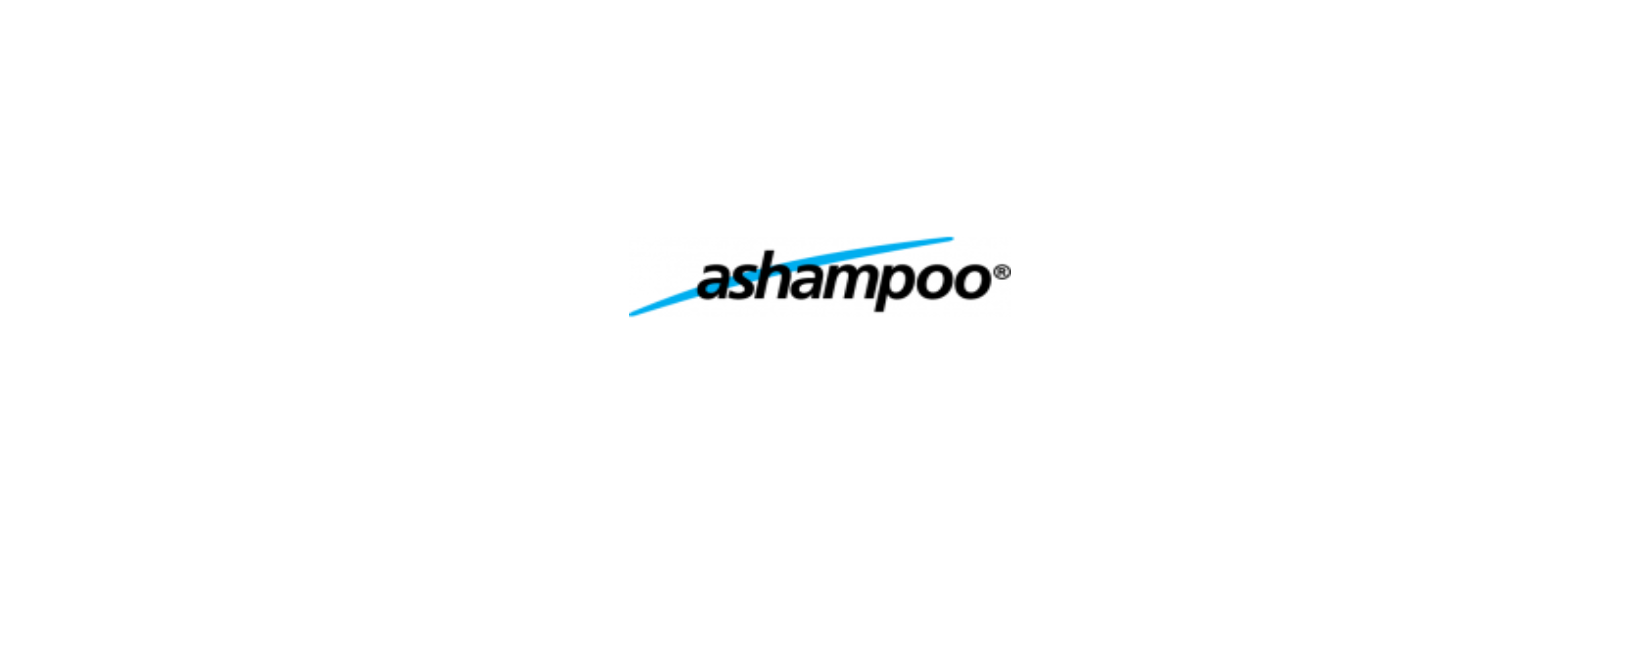 Ashampoo Discount Code 2022